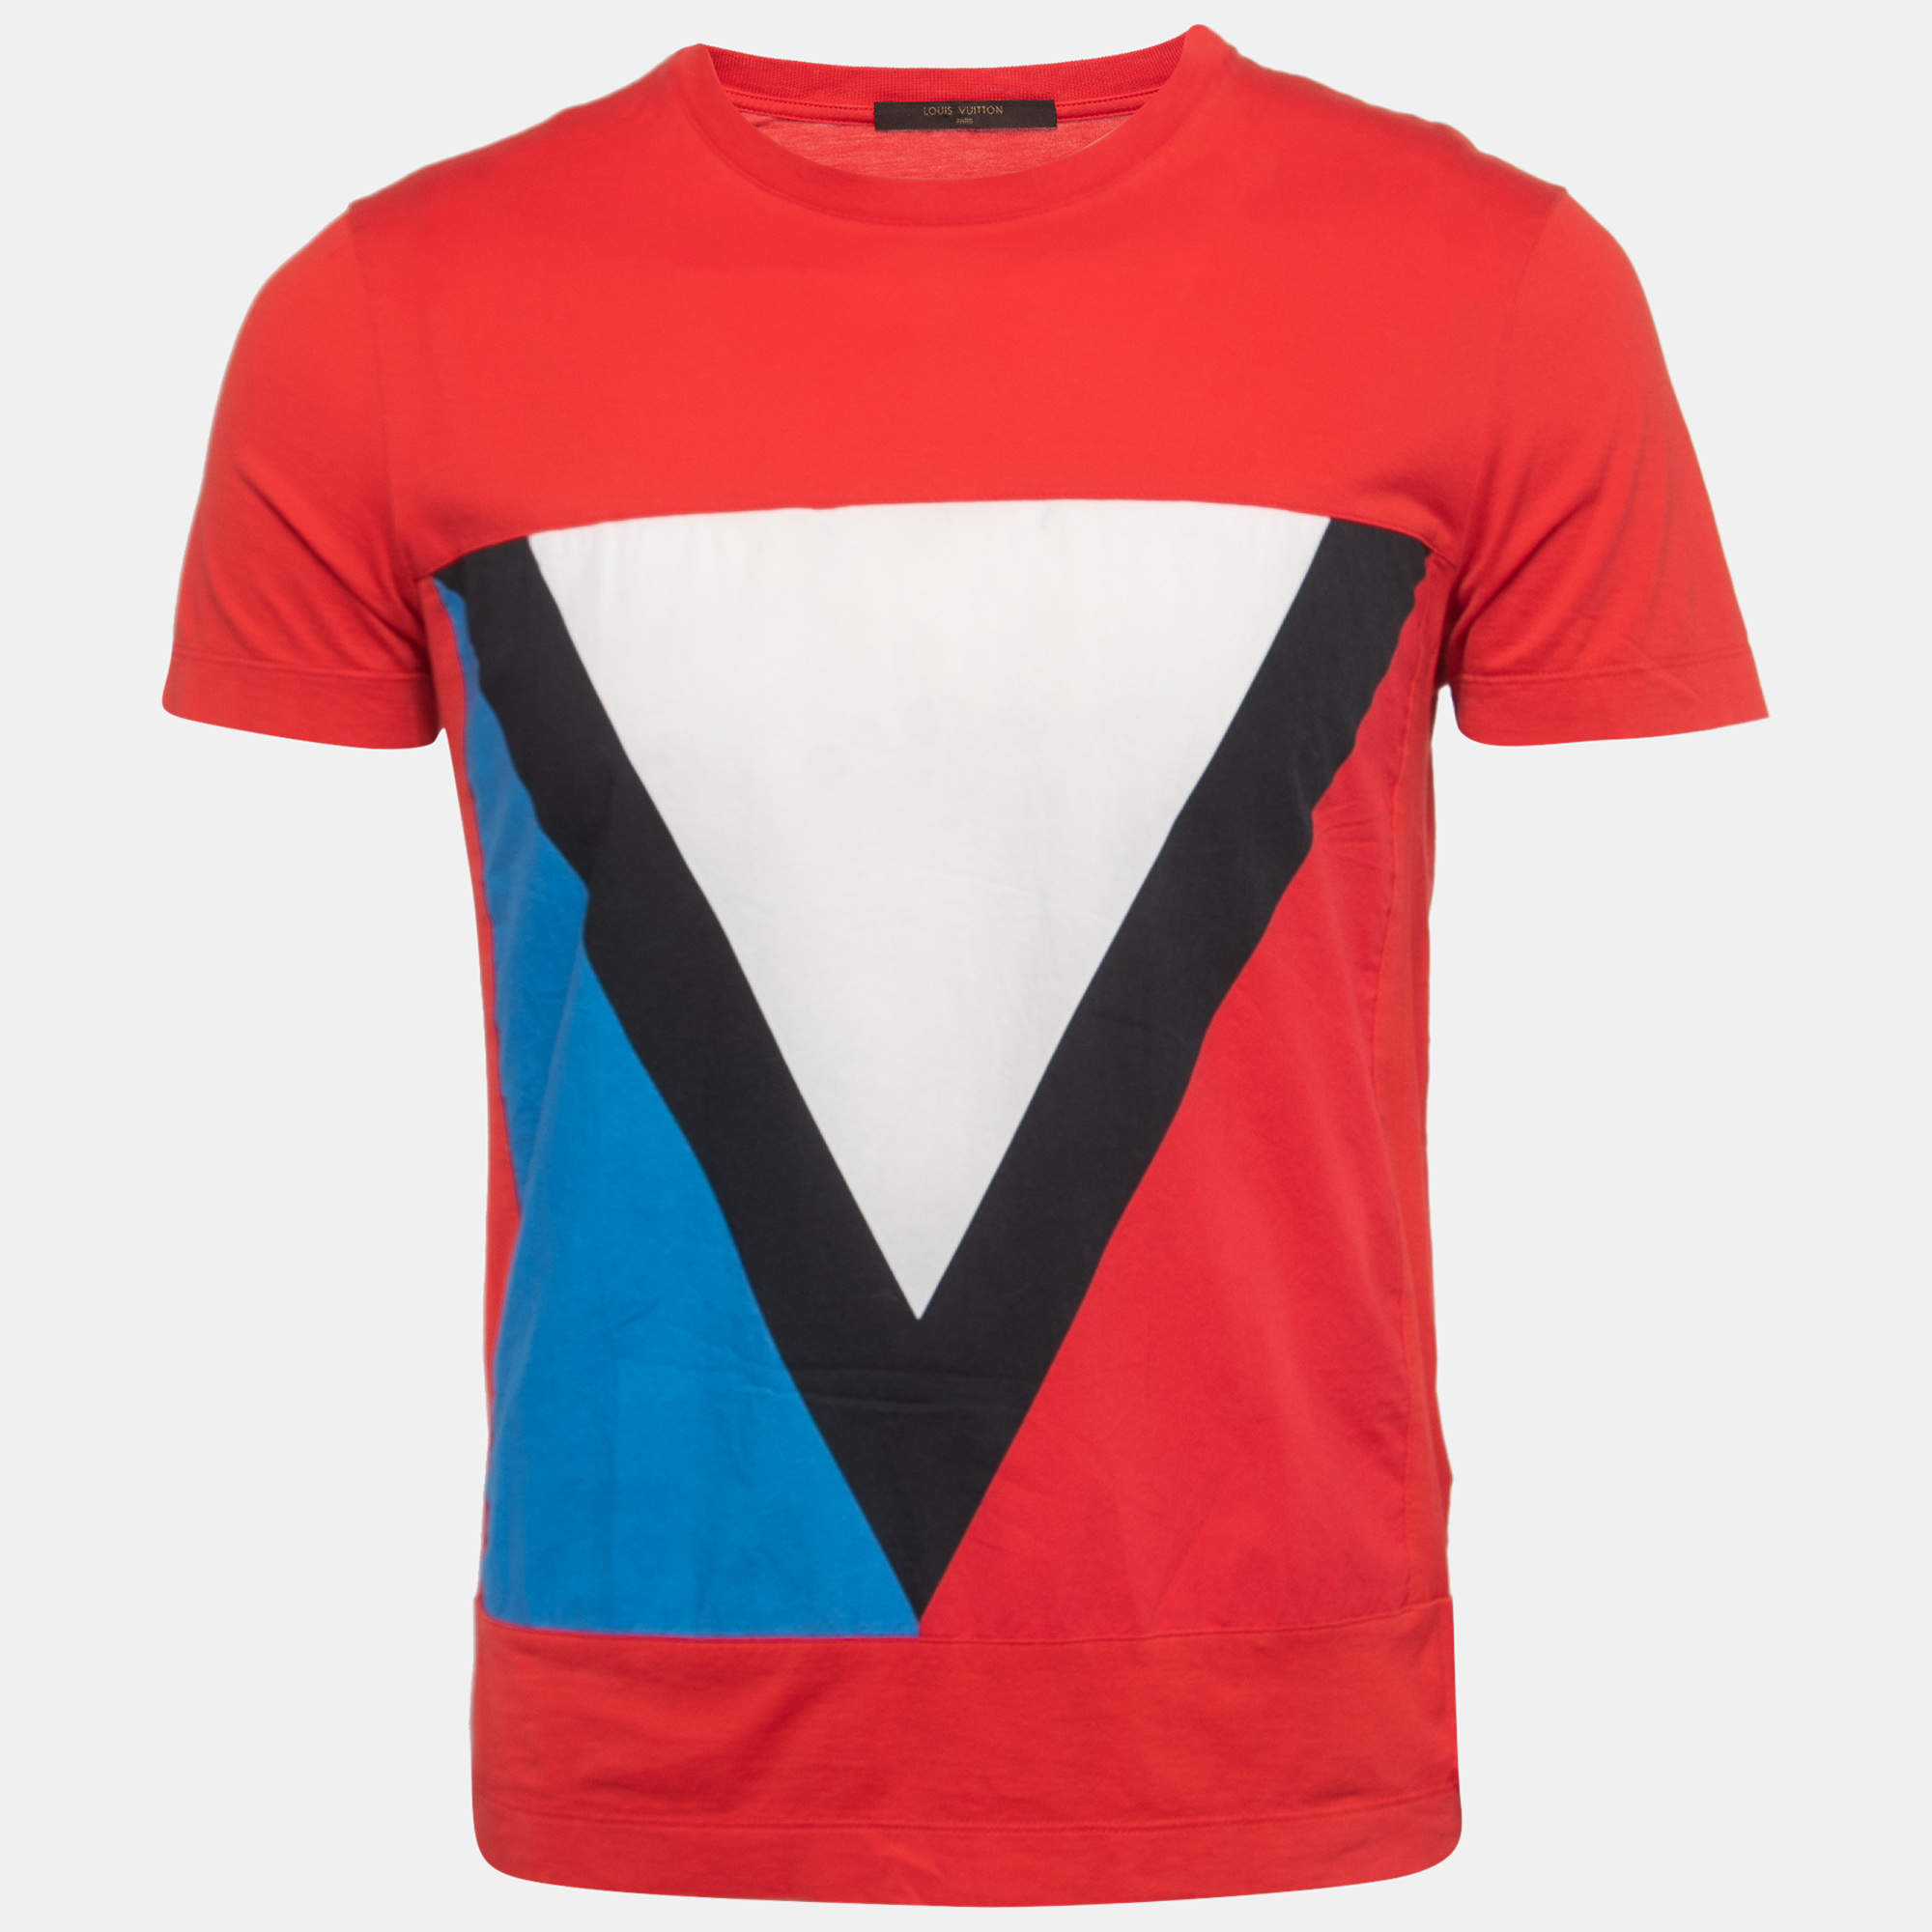 Cheap Red Louis Vuitton Logo T Shirt - Shirt Low Price